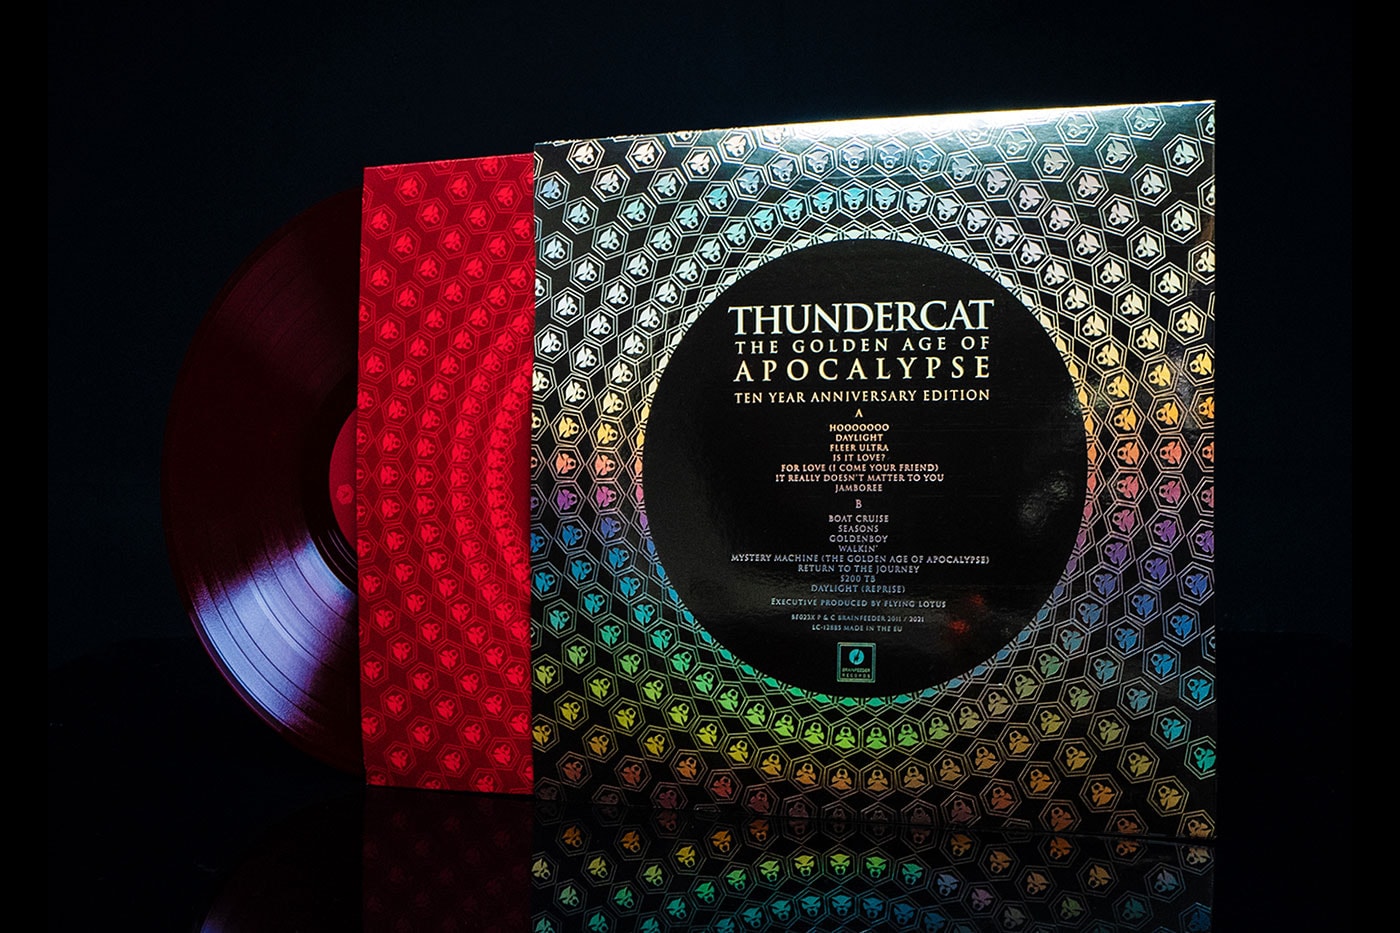 Thundercat The Golden Age of Apocalypse 10th Anniversary deluxe vinyl reissue release Info